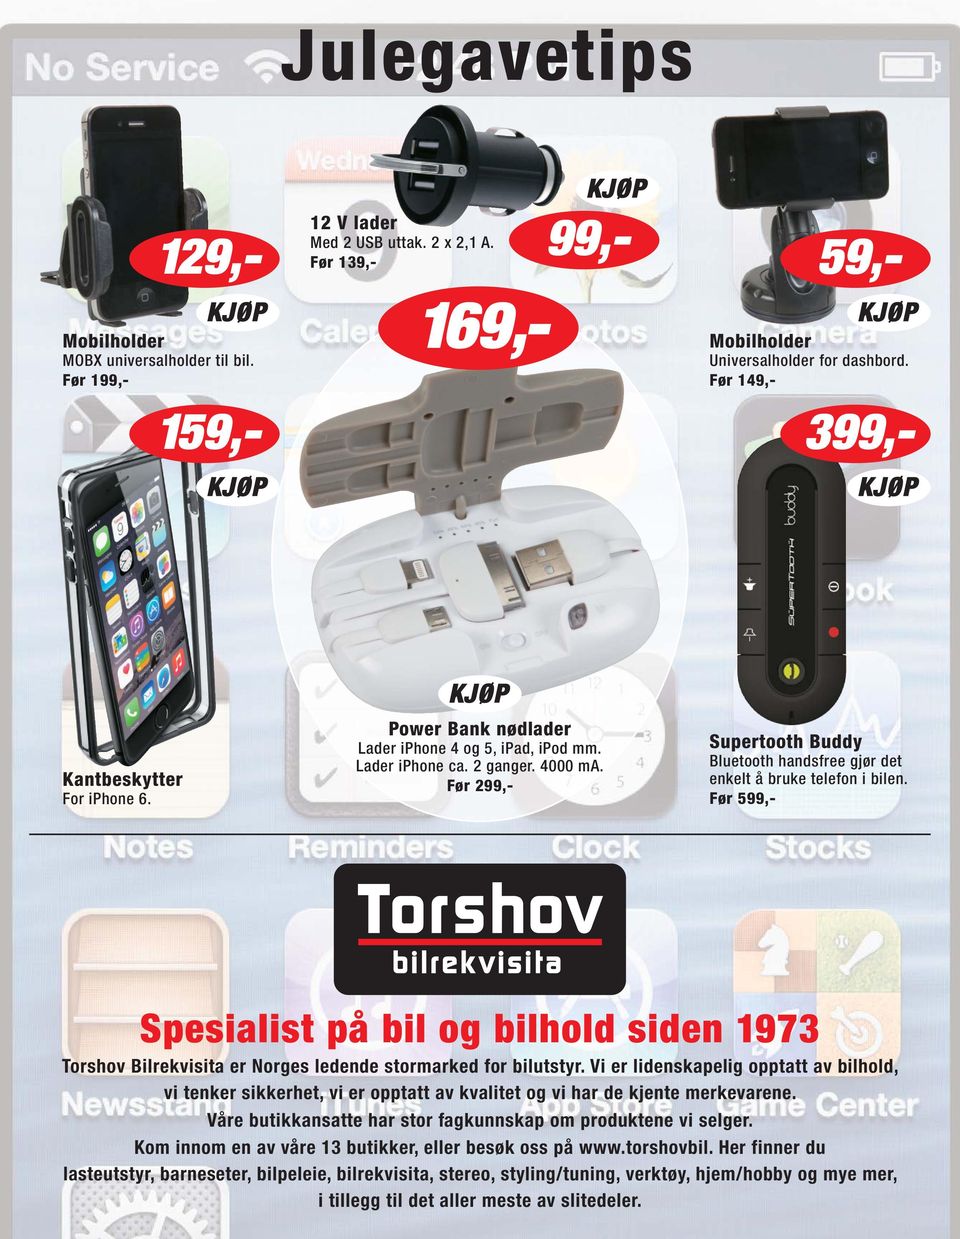 Før 599,- 399,- Kantbeskytter For iphone 6. Spesialist på bil og bilhold siden 1973 Torshov Bilrekvisita er Norges ledende stormarked for bilutstyr.